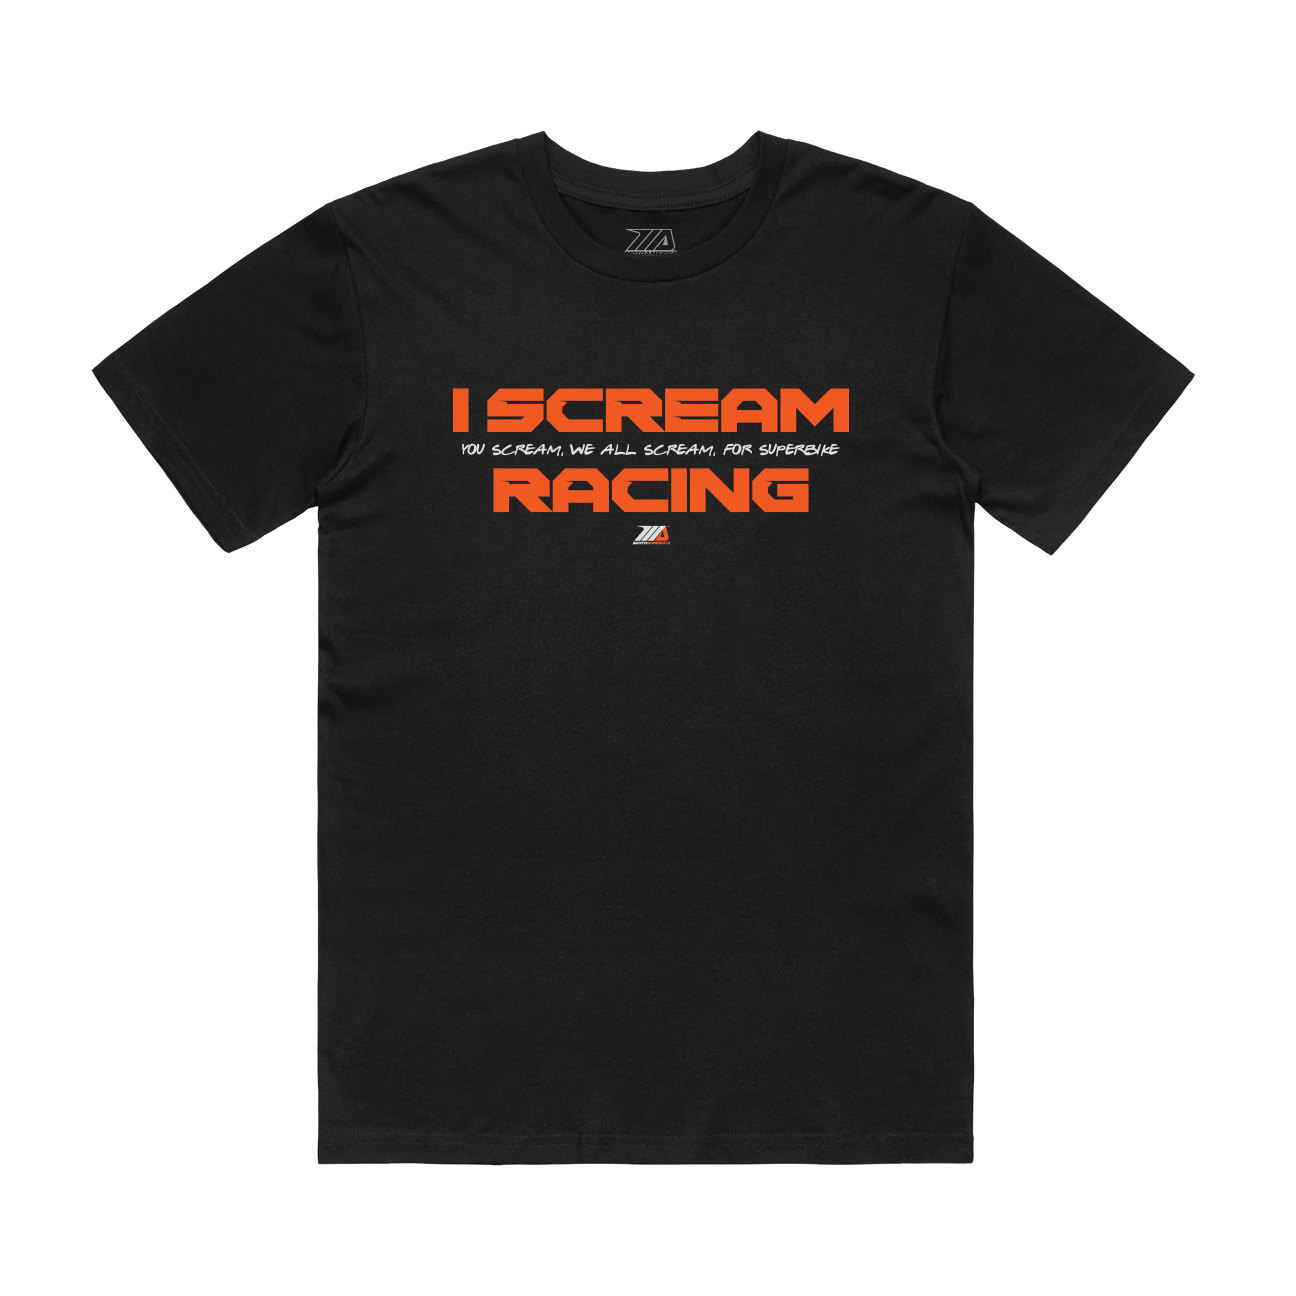 I Scream Racing, Black Tee